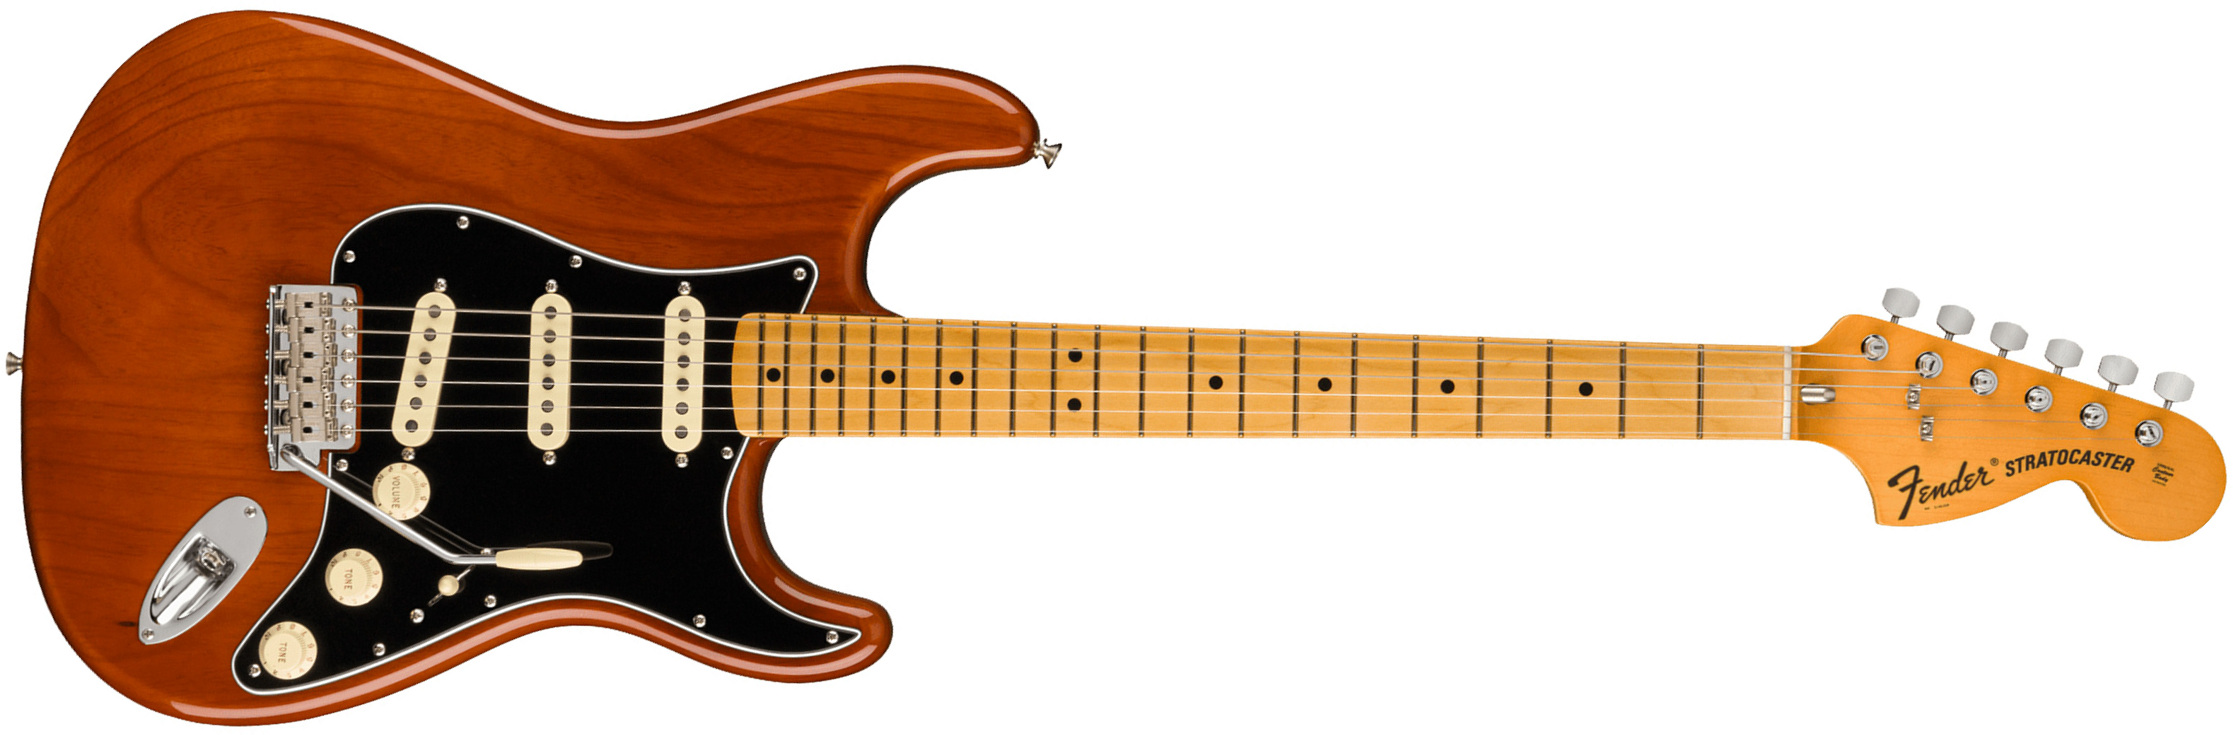 Fender Strat 1973 American Vintage Ii Usa 3s Trem Mn - Mocha - Elektrische gitaar in Str-vorm - Main picture